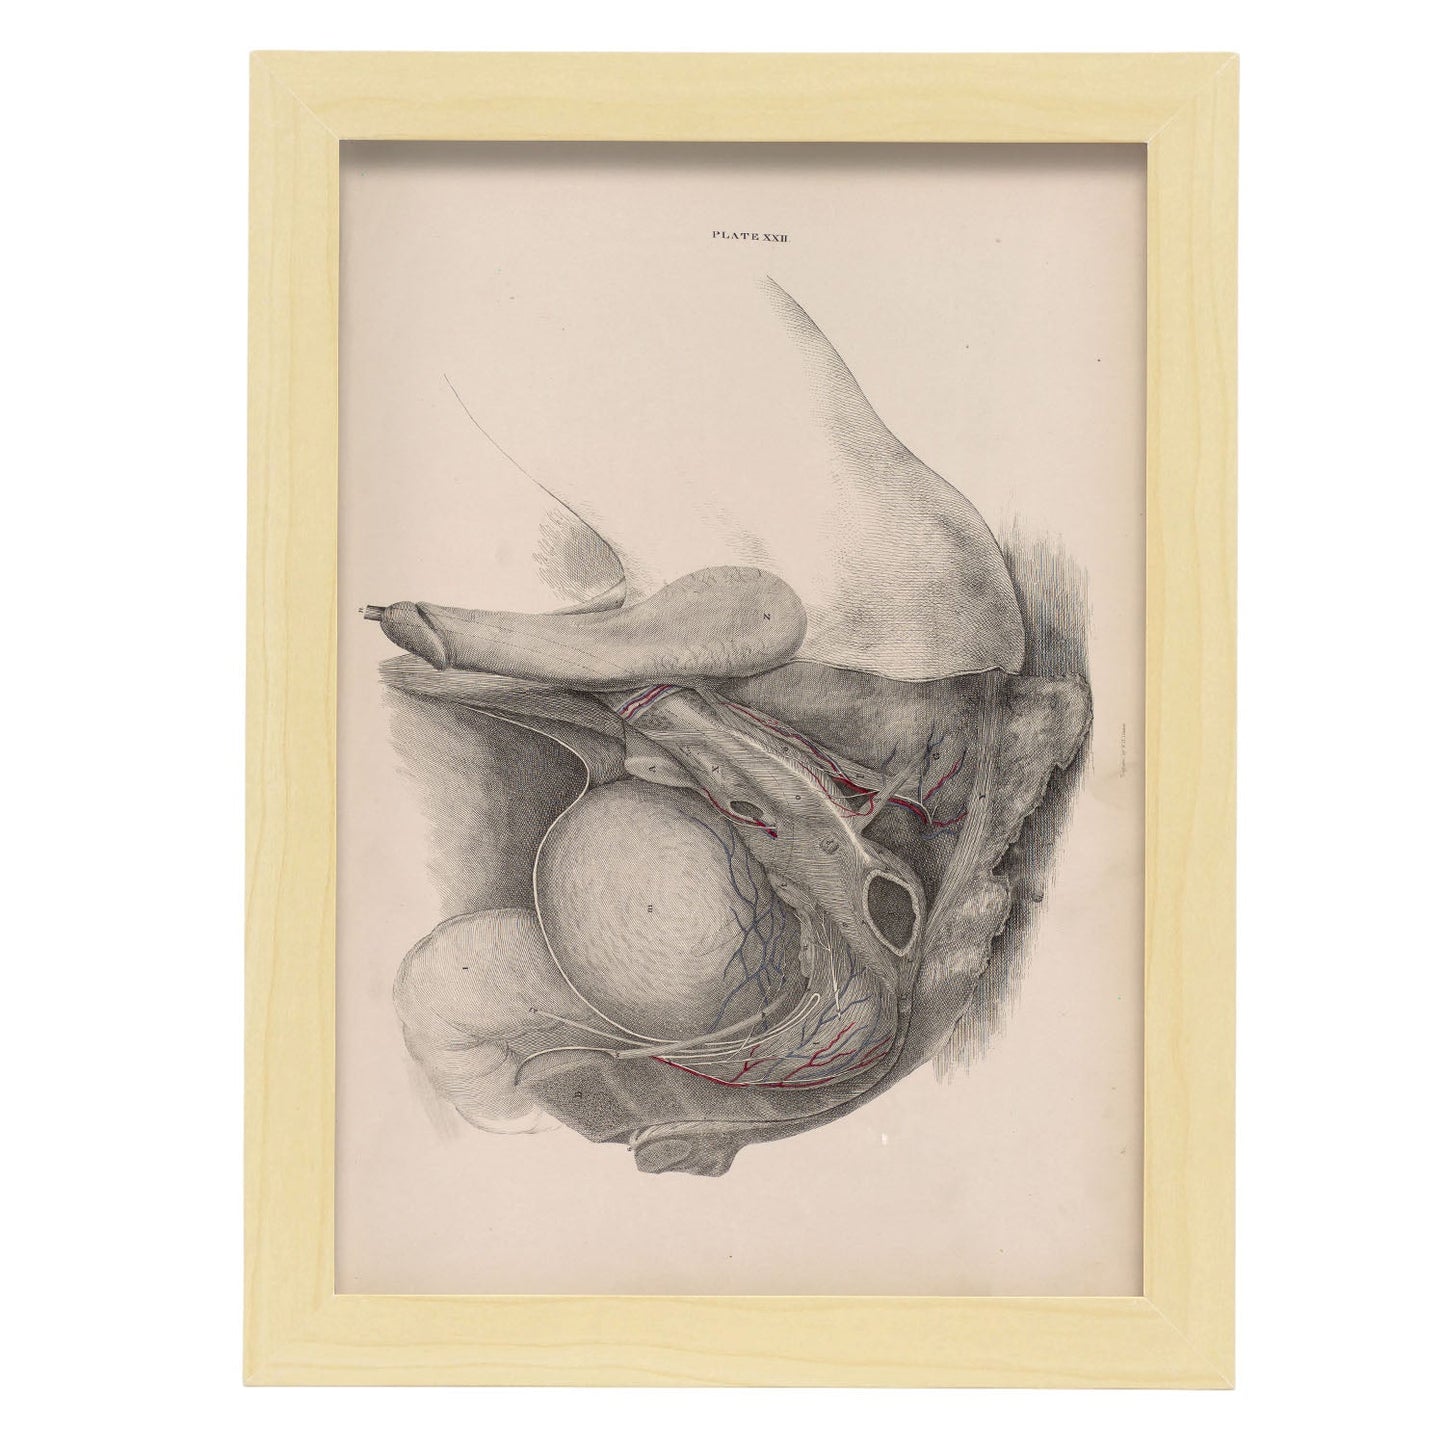 Dissection of the pelvis, urogenital system, male-Artwork-Nacnic-A4-Marco Madera clara-Nacnic Estudio SL